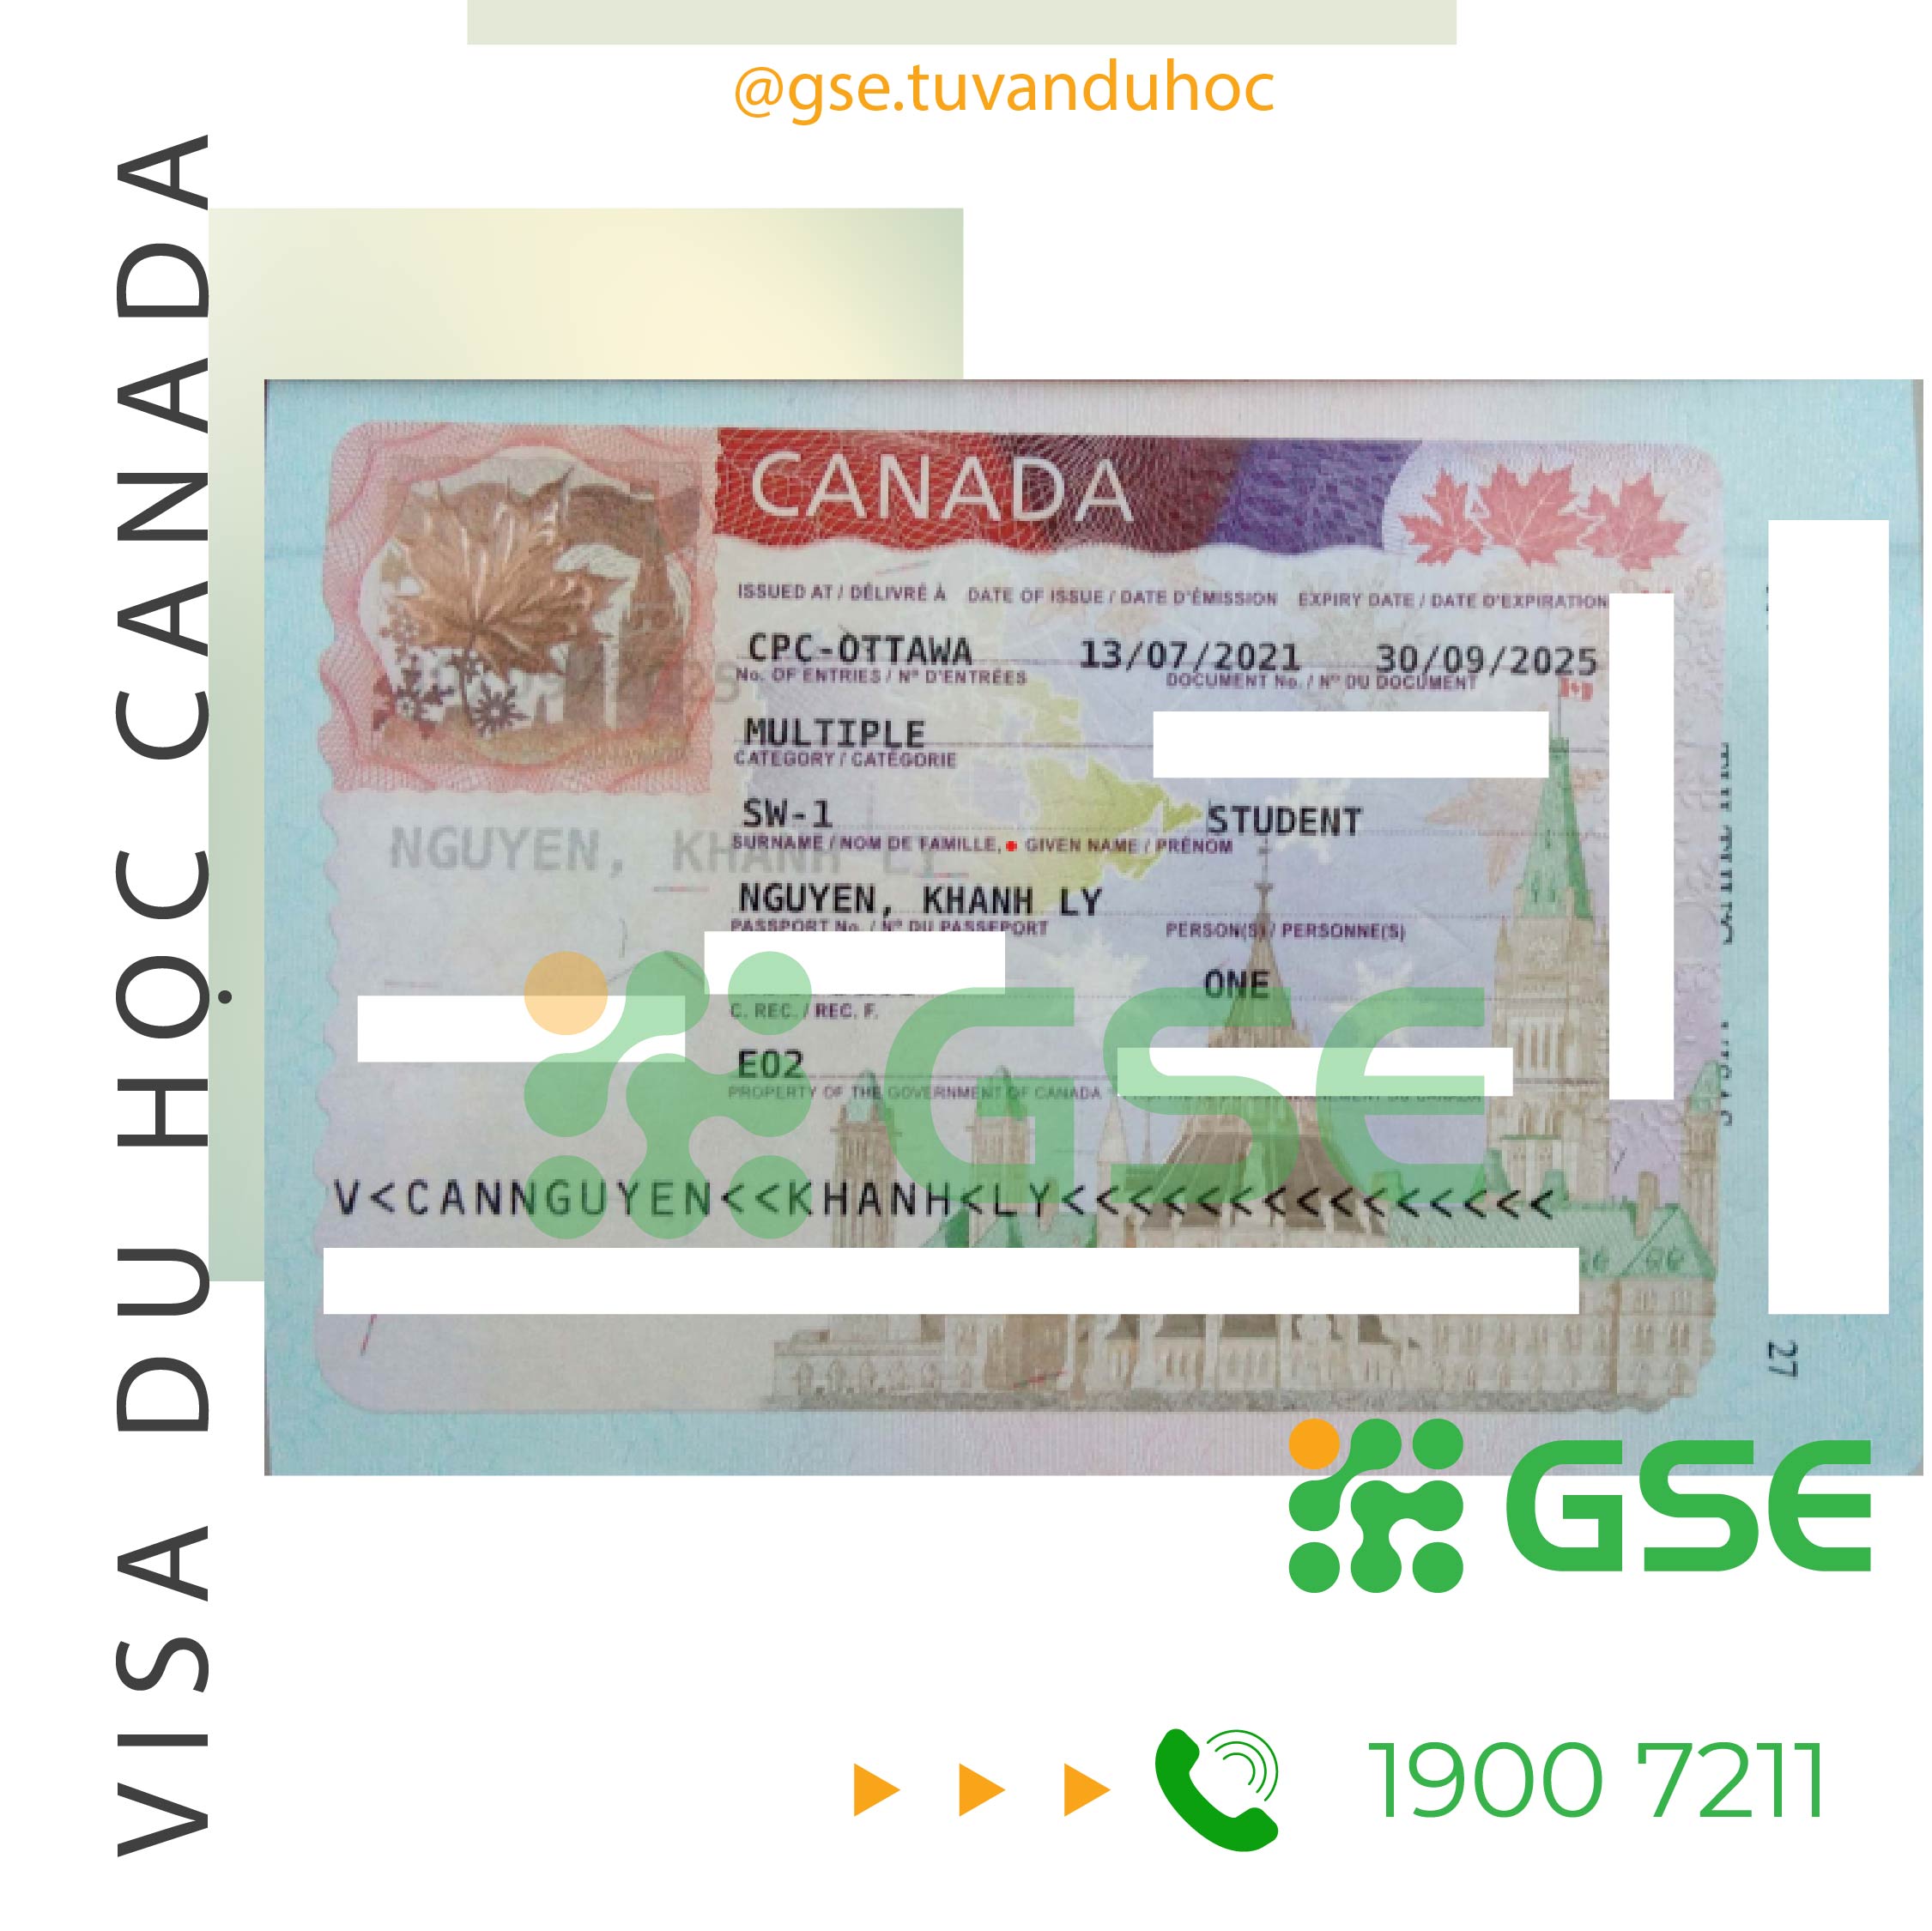 Visa canada khanh ly - Visa du học Canada - Khánh Ly